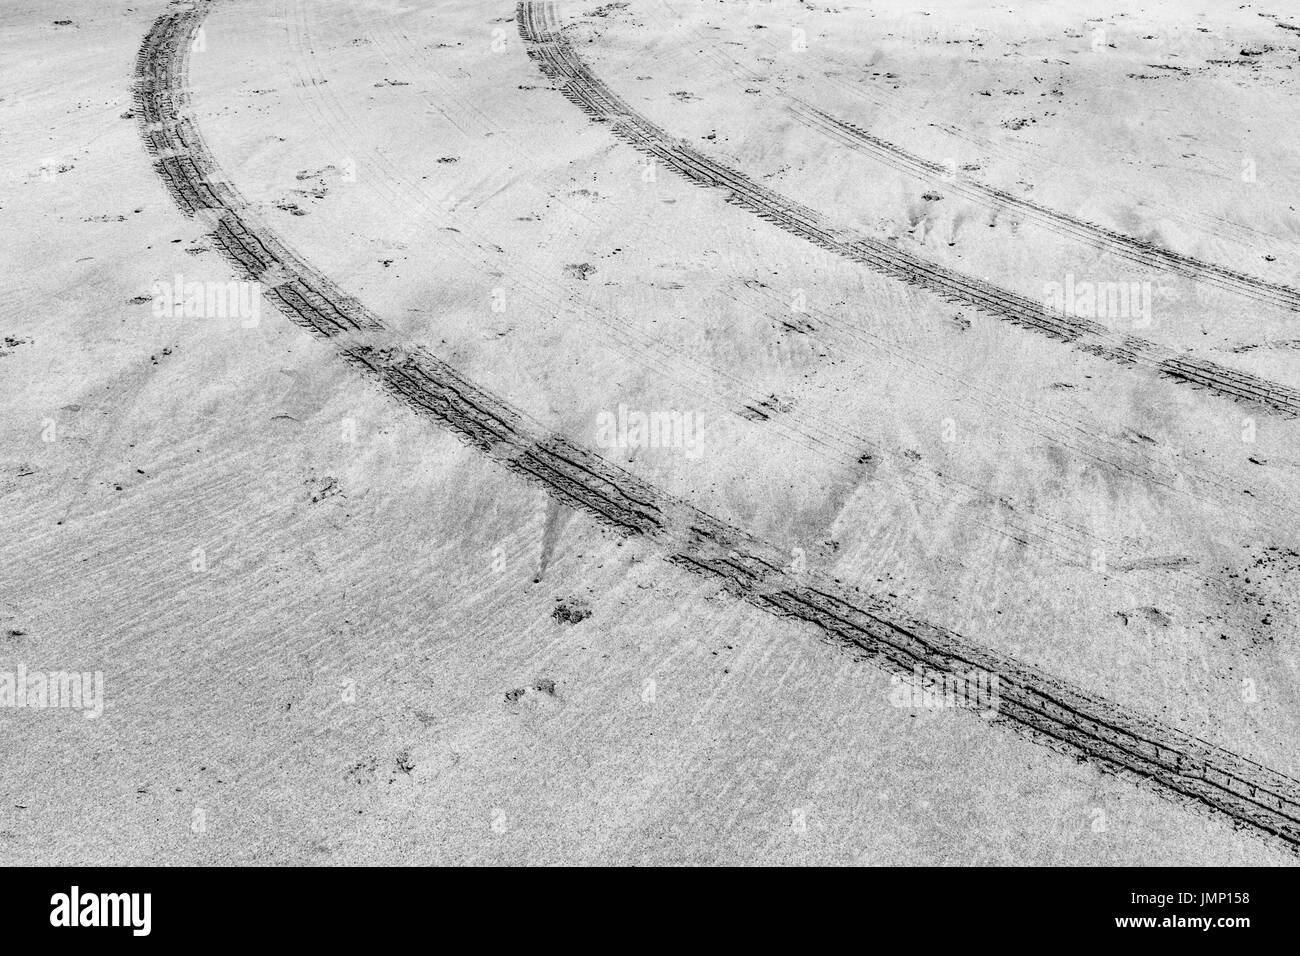 Immagine in bianco e nero di forma curva/ curvando tracce di pneumatici in umidità spiaggia di sabbia in Cornovaglia, UK. Piste curve, curvando tracce di pneumatici. Foto Stock